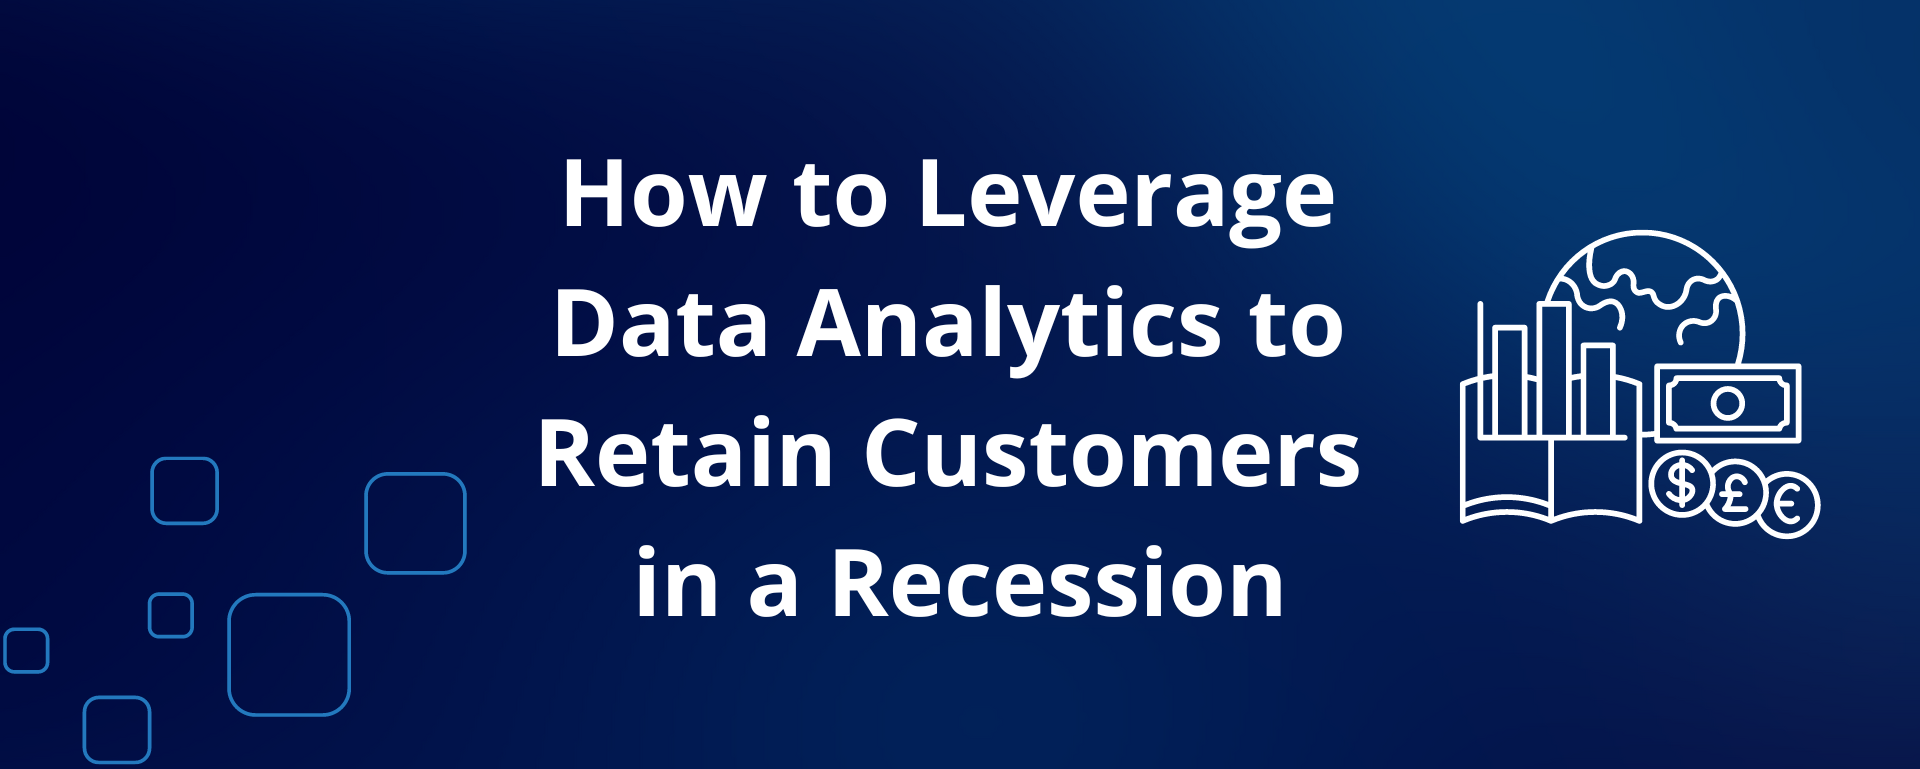 How to Leverage Data Analytics